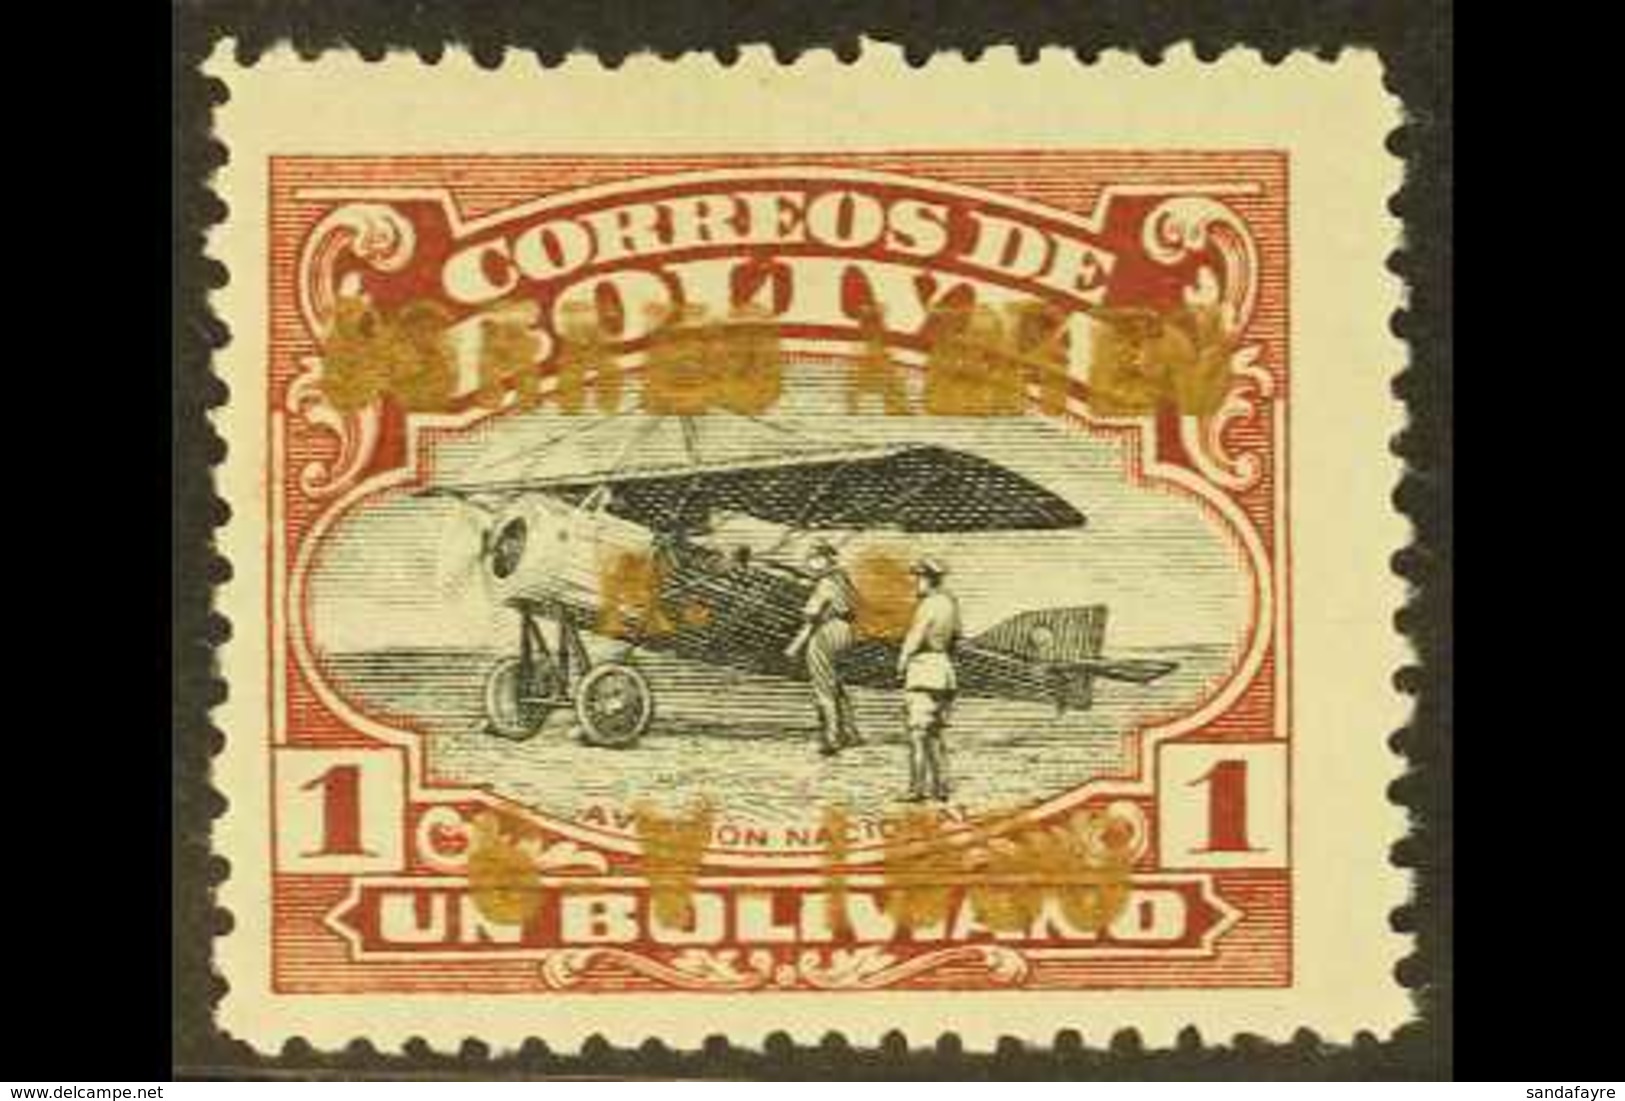 1930 1b Red-brown & Black Air "CORREO AEREO" Overprint In BRONZE (METALLIC) INK (Scott C23, SG 240), Fine Mint, Very Fre - Bolivien